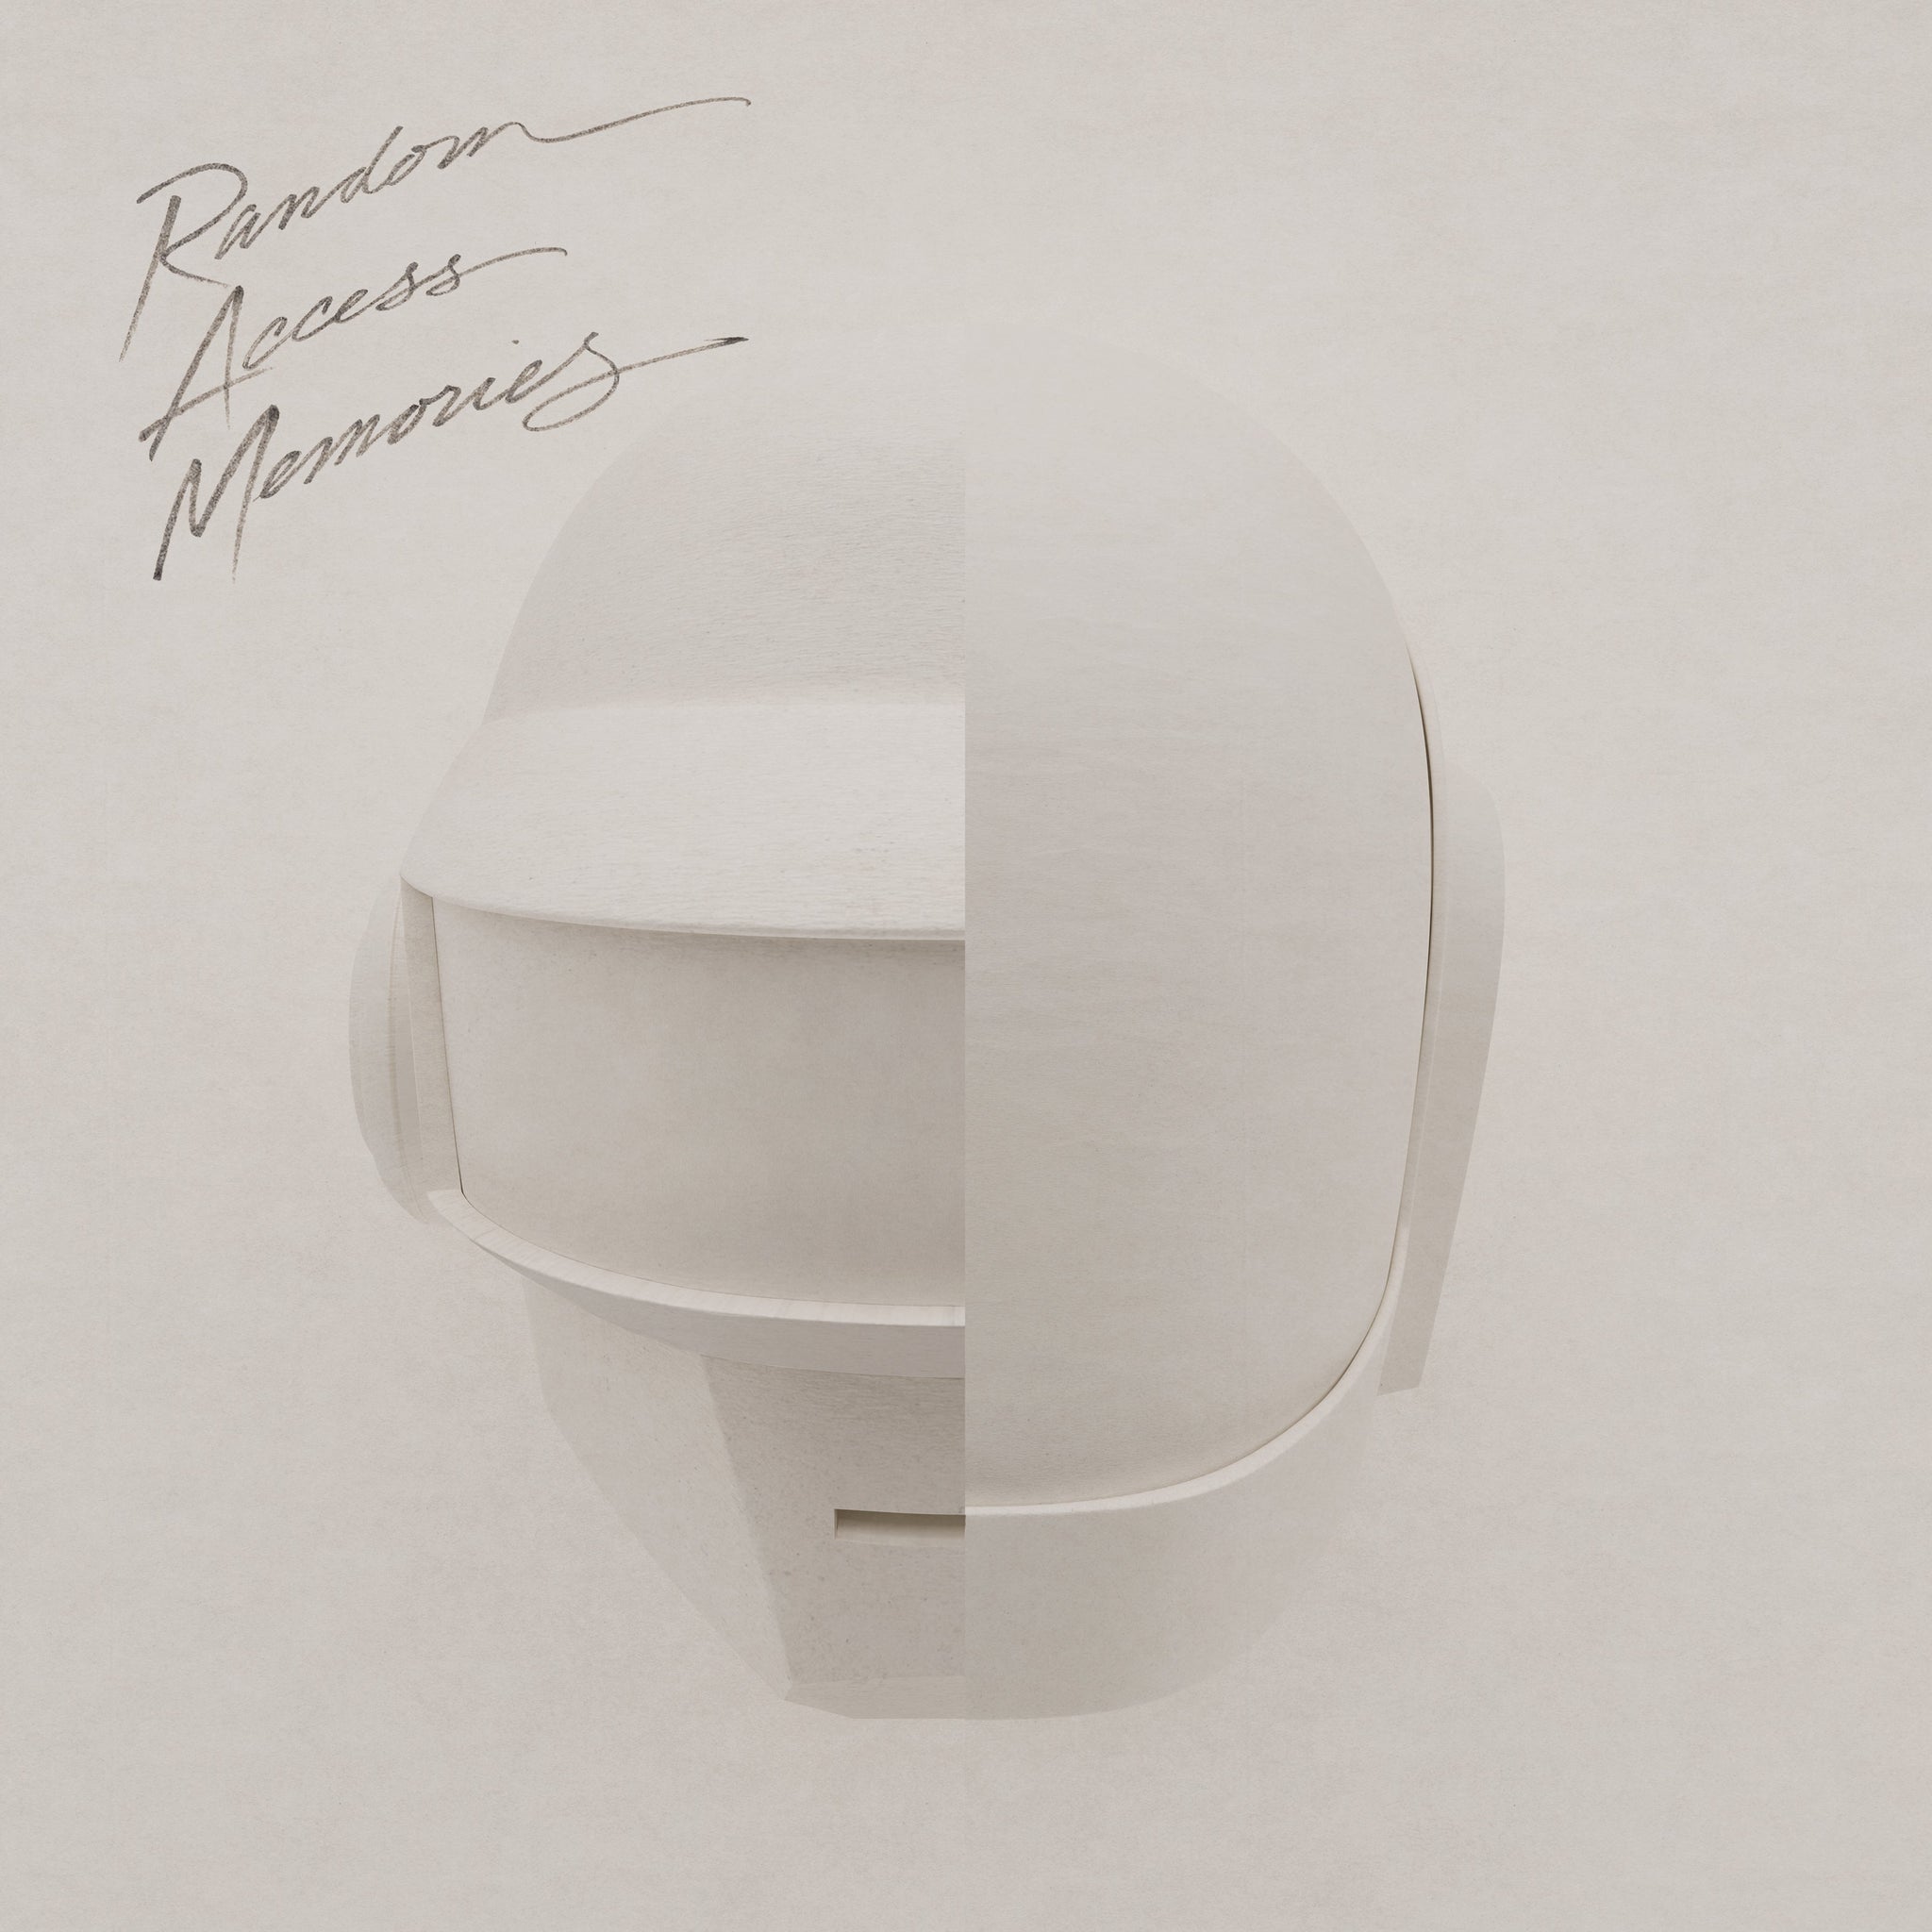 Daft Punk - Random Access Memories (Drumless Edition) – Vinilo Record Store